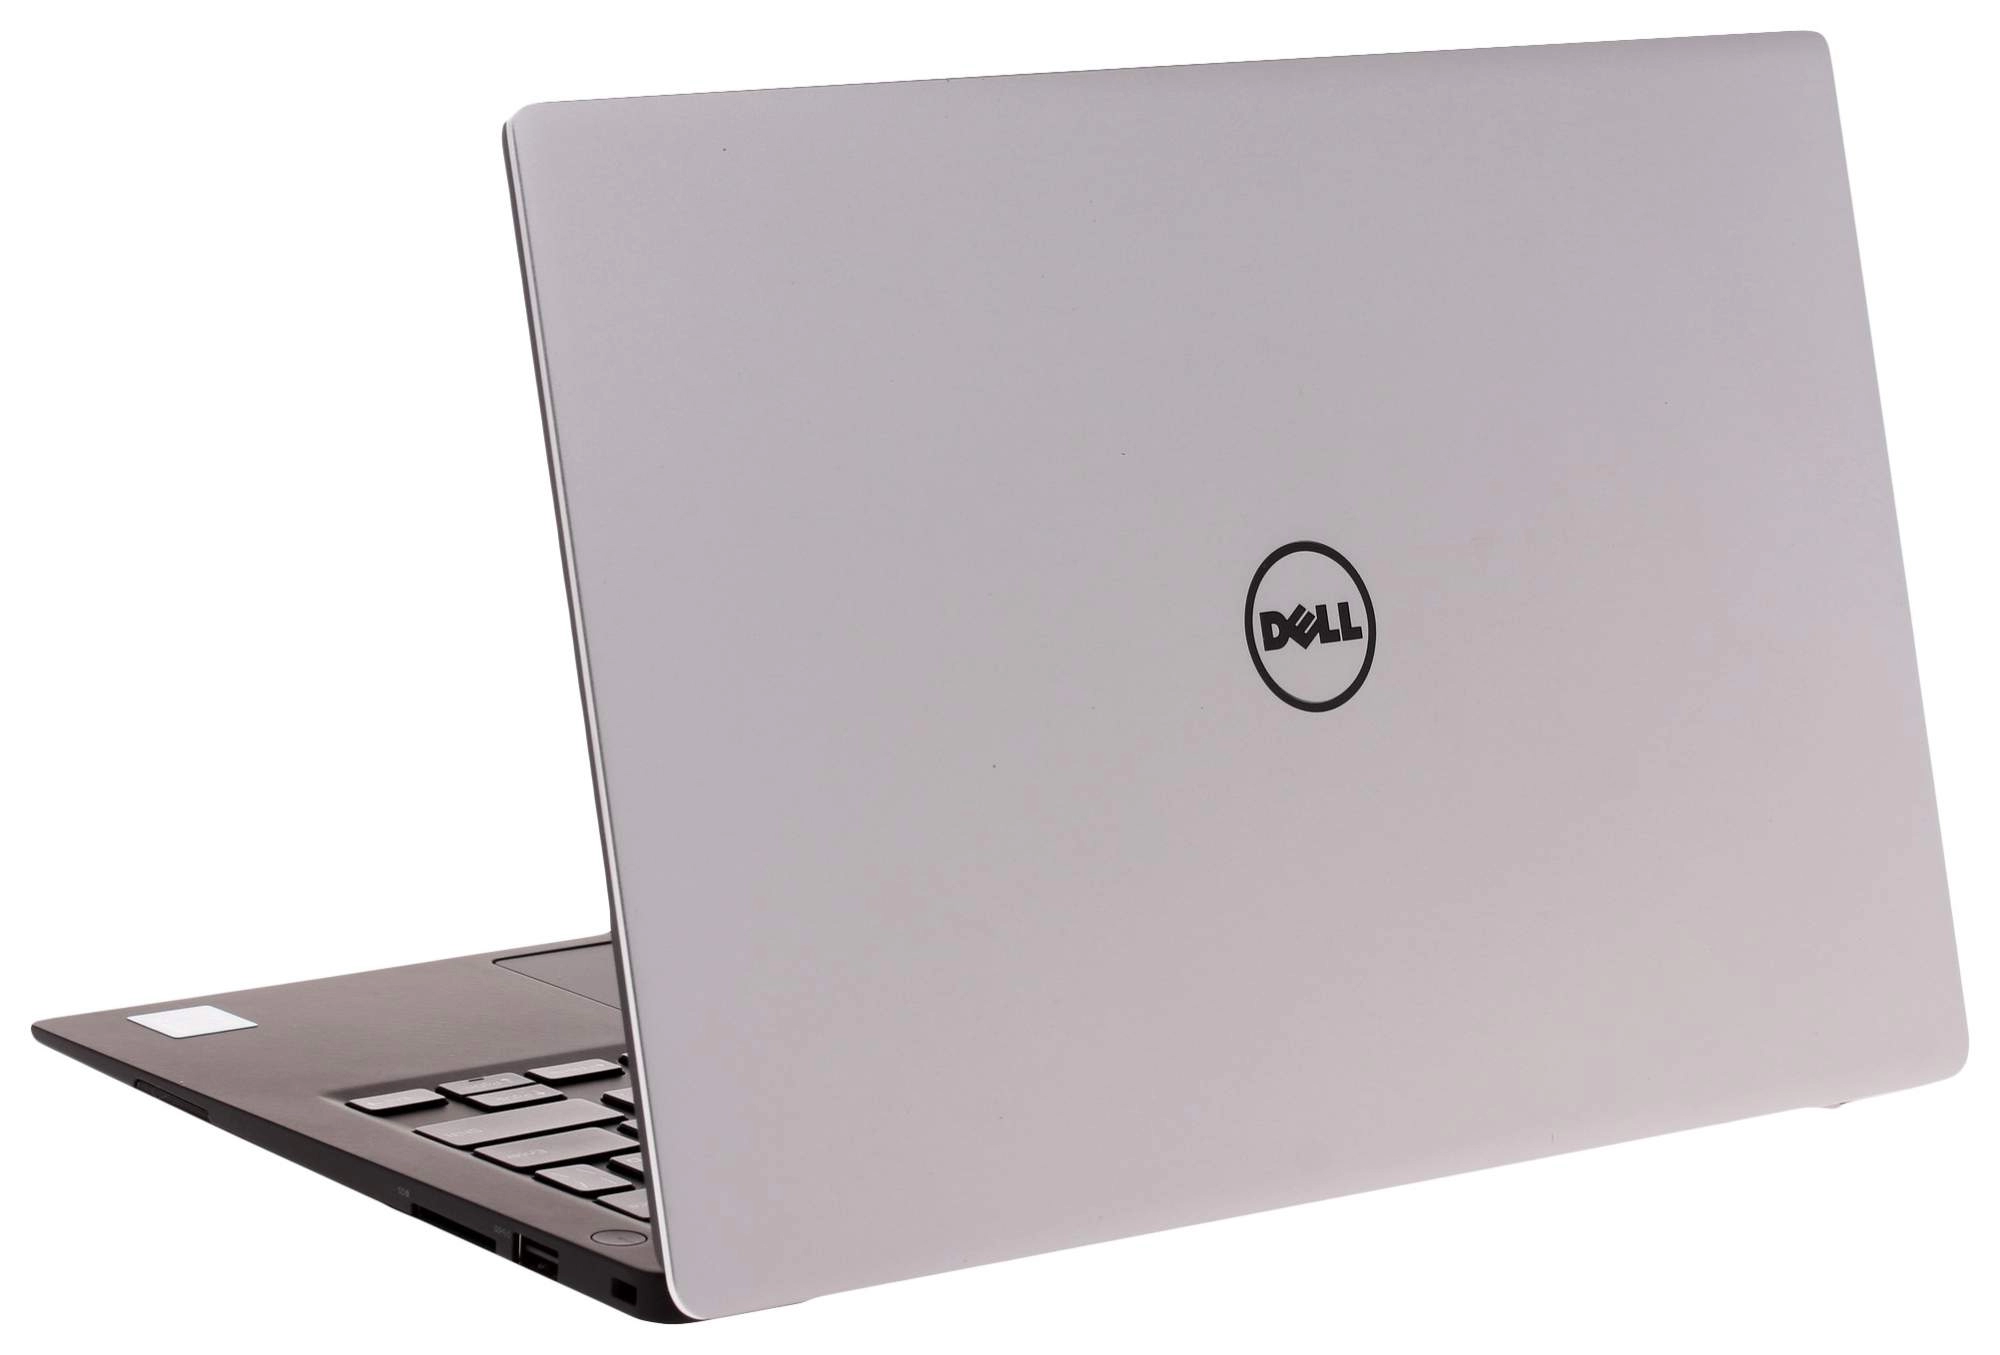 Ноутбук Dell XPS 13 (9360), 8 ГБ, Windows 10 Professional (64bit), Серебристый